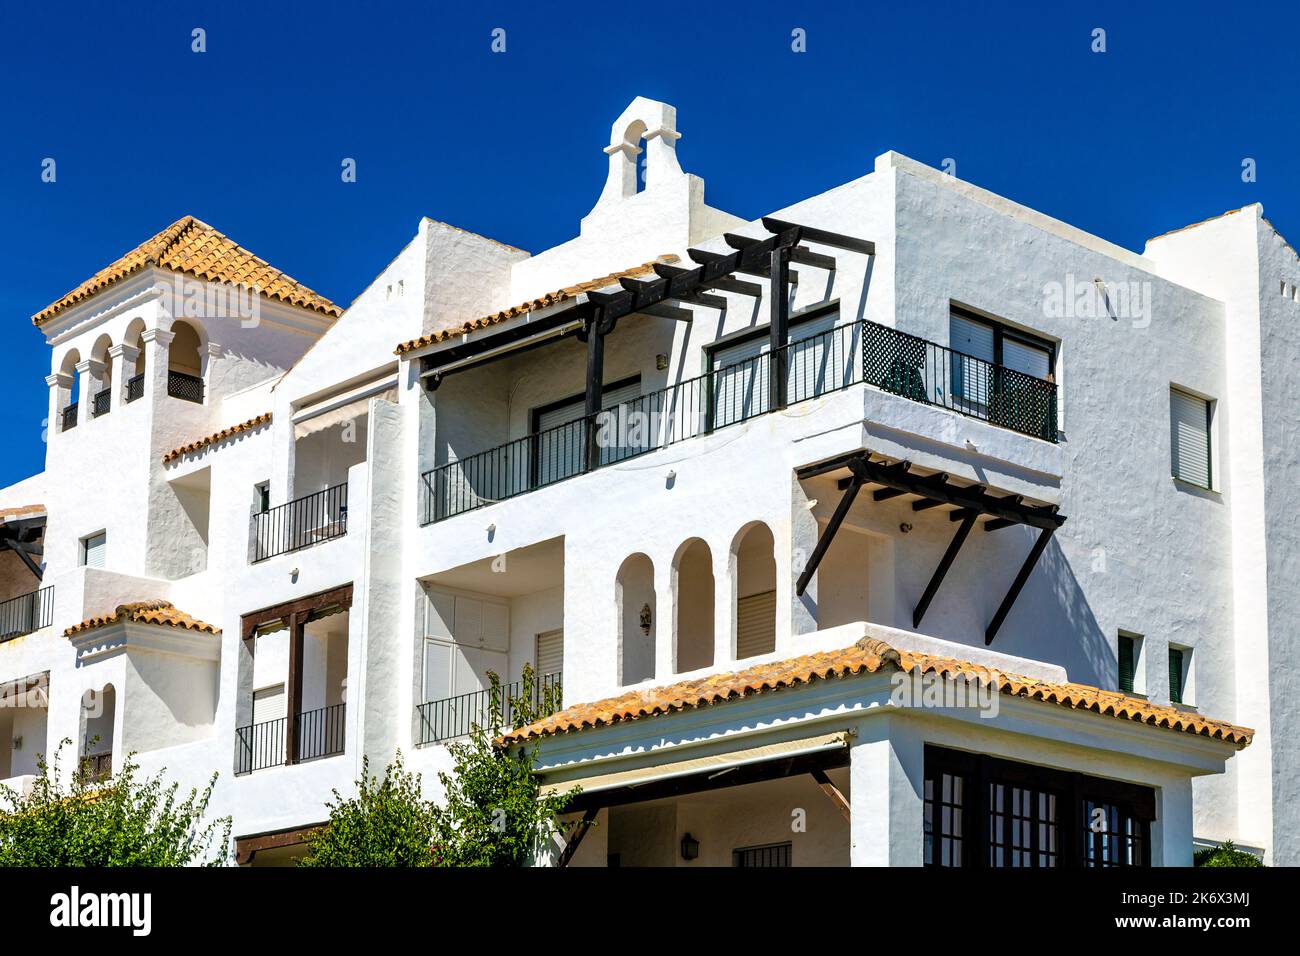 Spanish moorish style, whitewashed houses along Playa de la Barrosa, Costa de la Luz, Cadiz, Spain Stock Photo